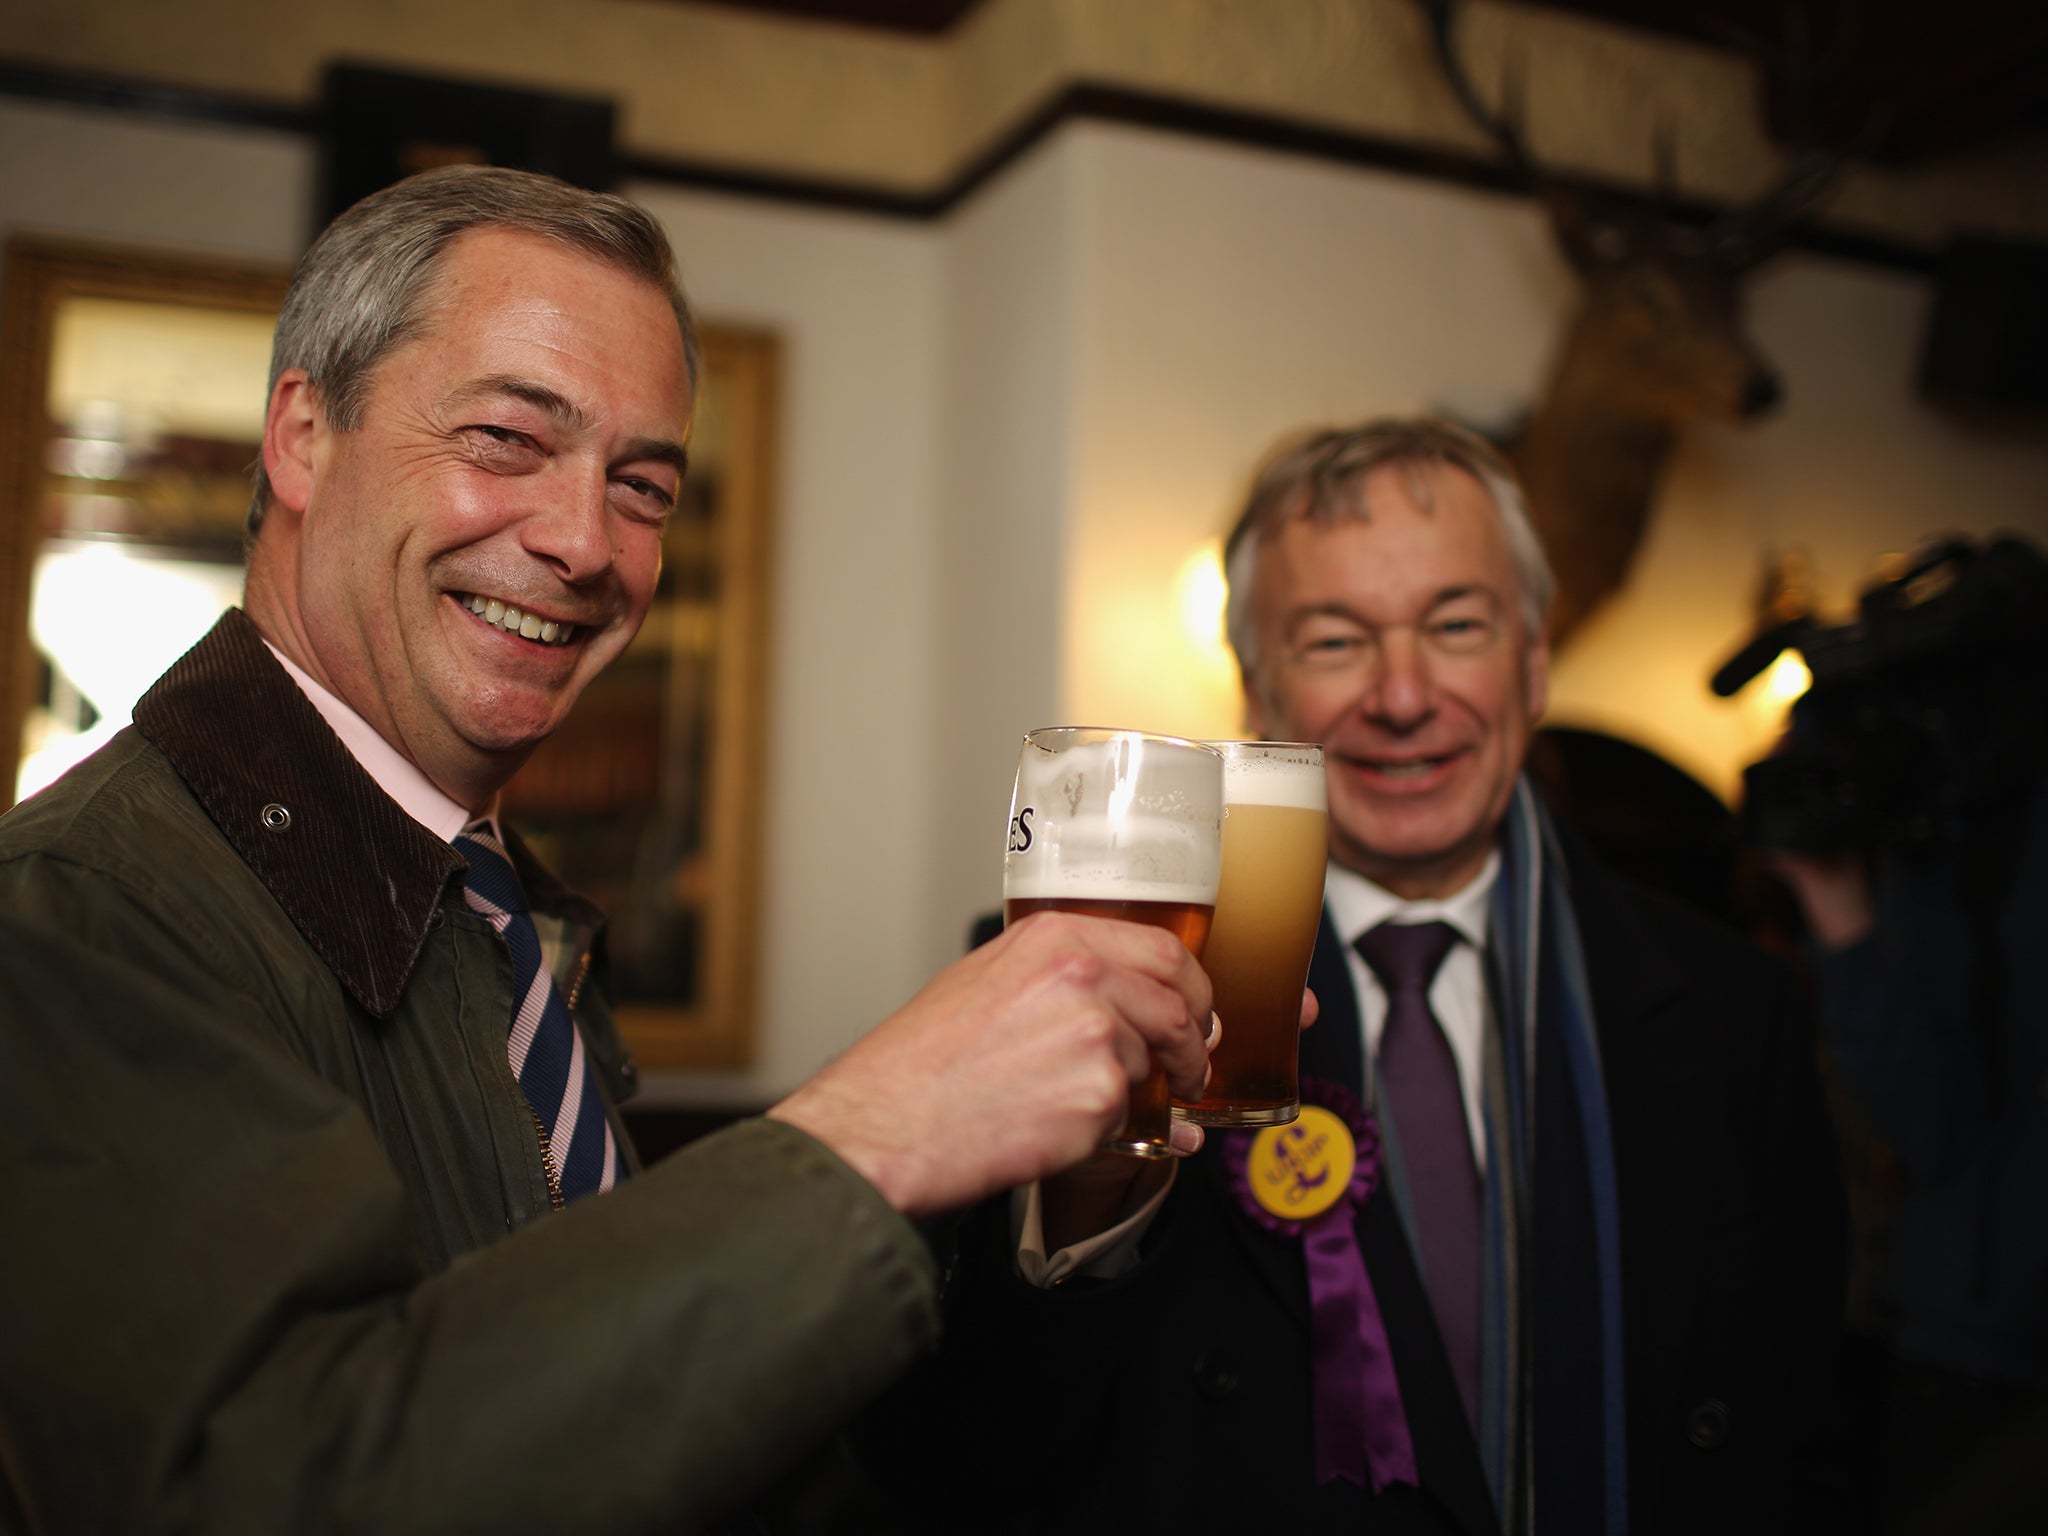 Ukip candidate Richard Elvin pictured with leader Nigel Farage